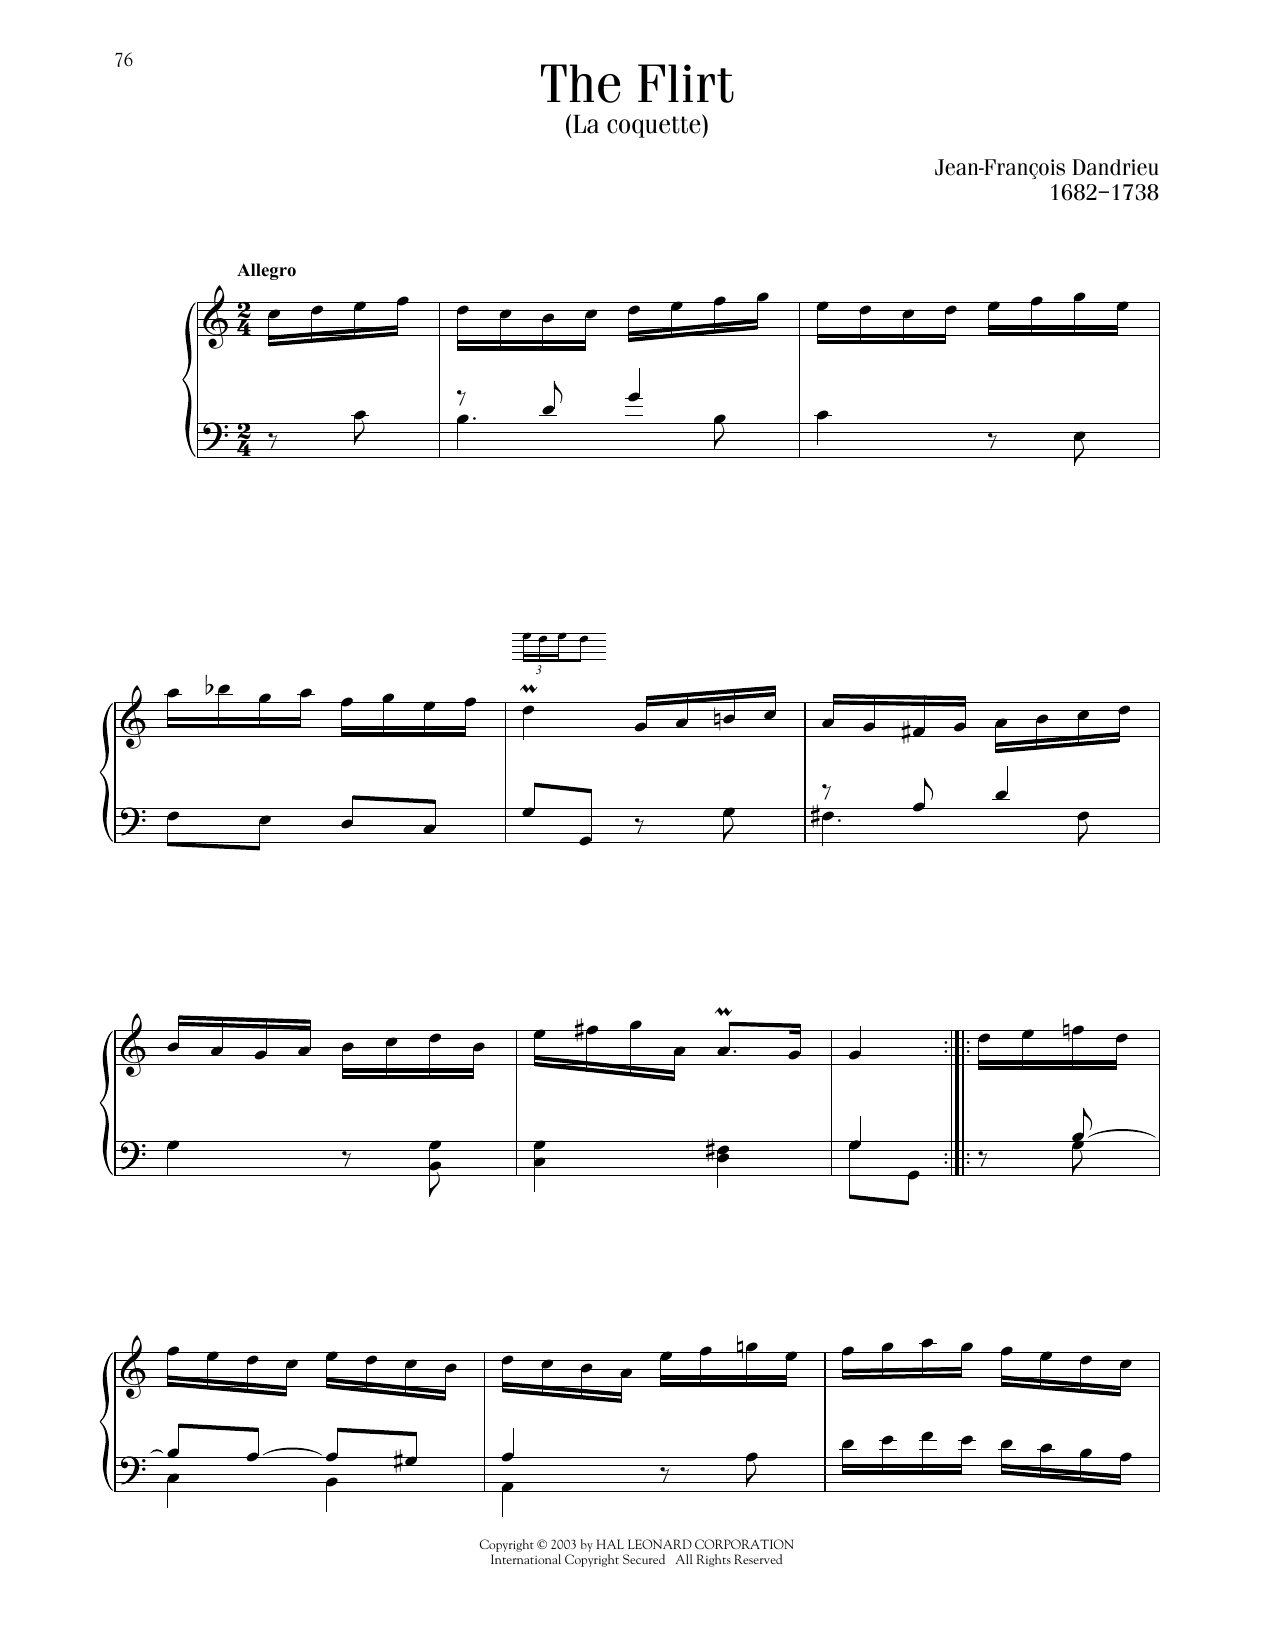 Jean-Francois Dandrieu La Coquette (The Flirt) sheet music notes printable PDF score